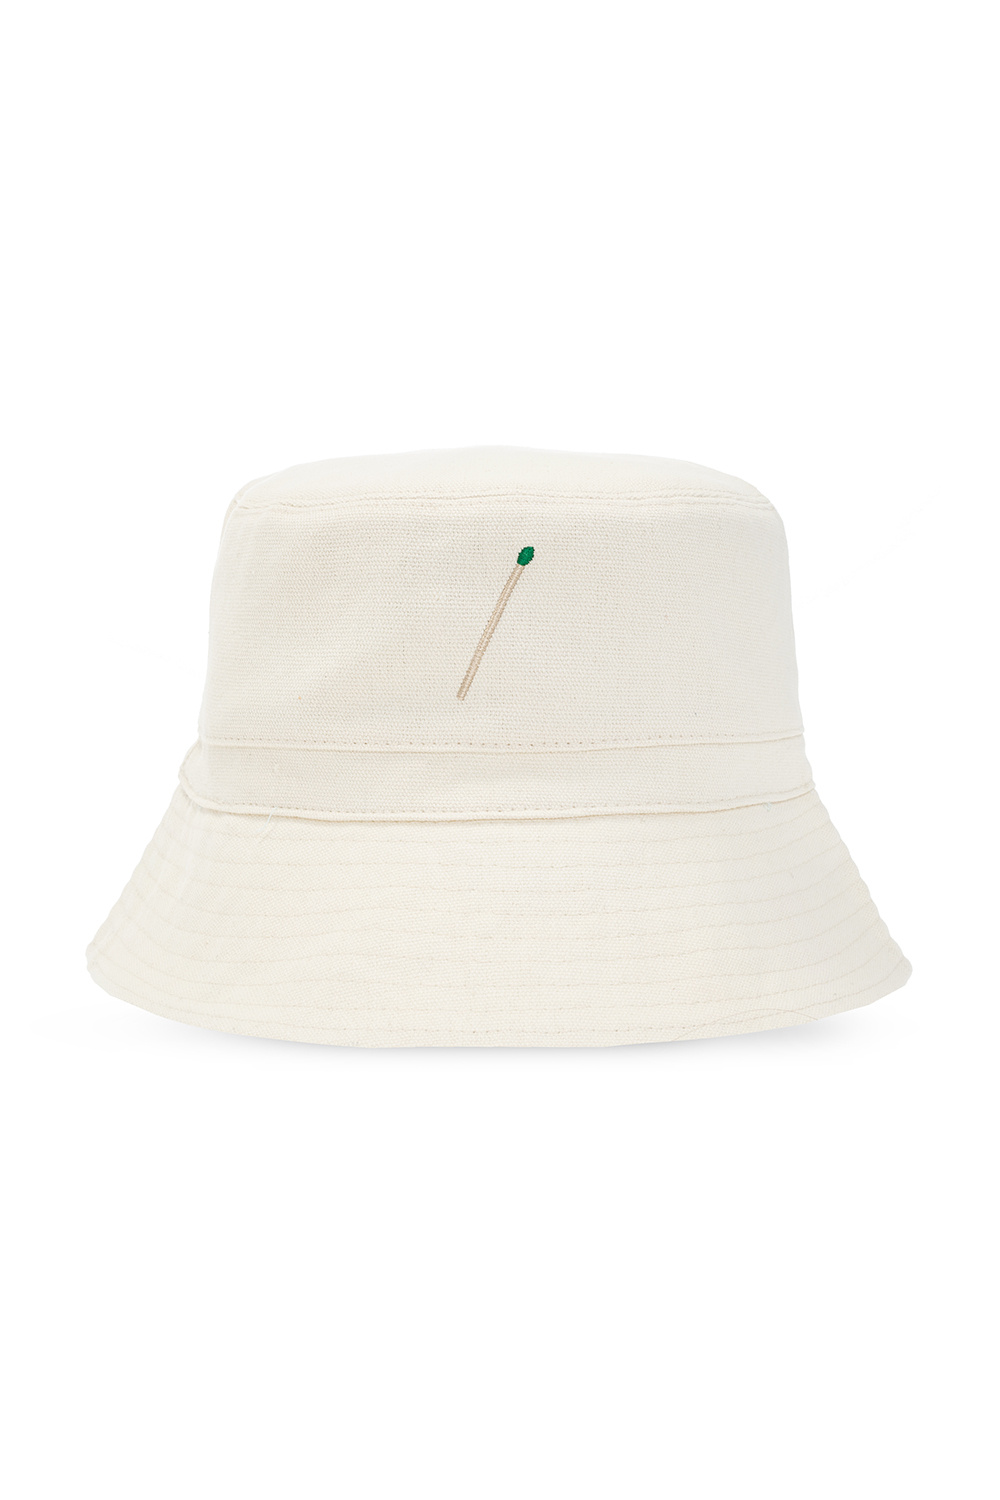 Nick Fouquet Linen hat | Men's Accessories | Vitkac